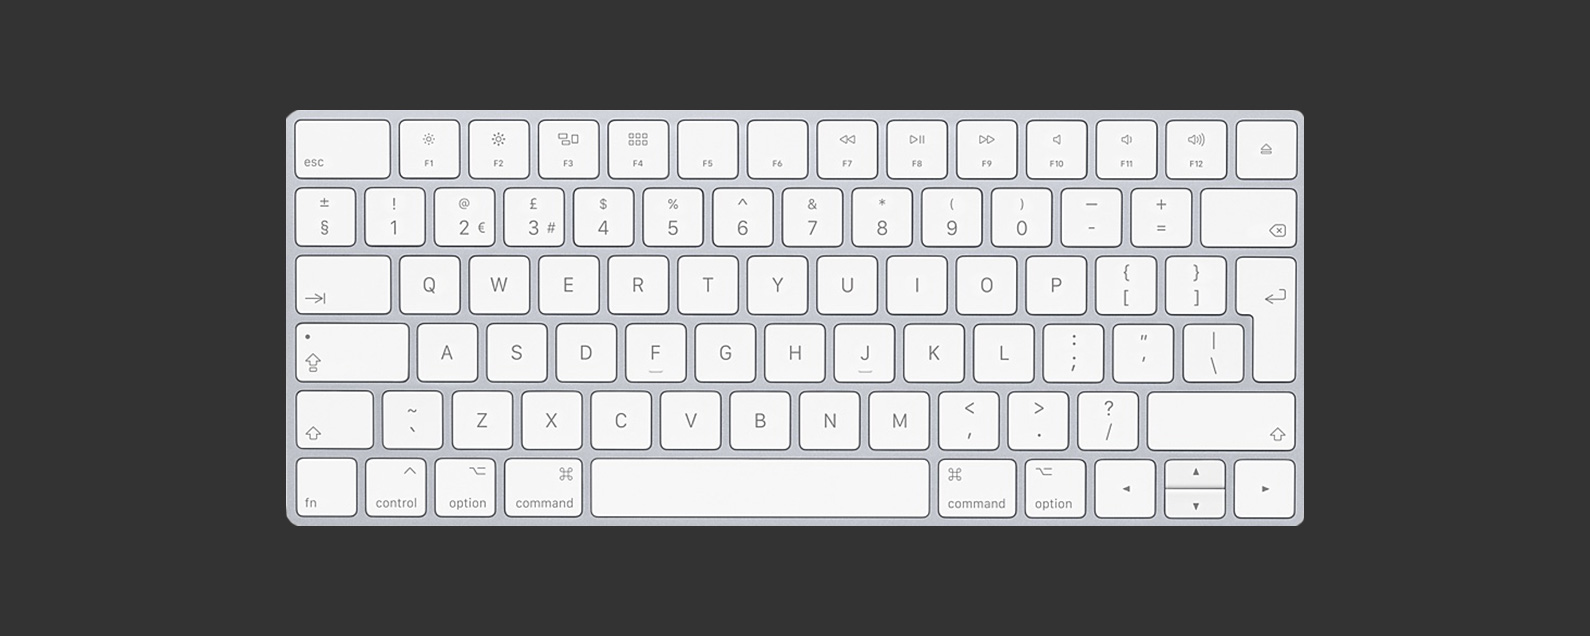 Keyboard app for mac ipad free